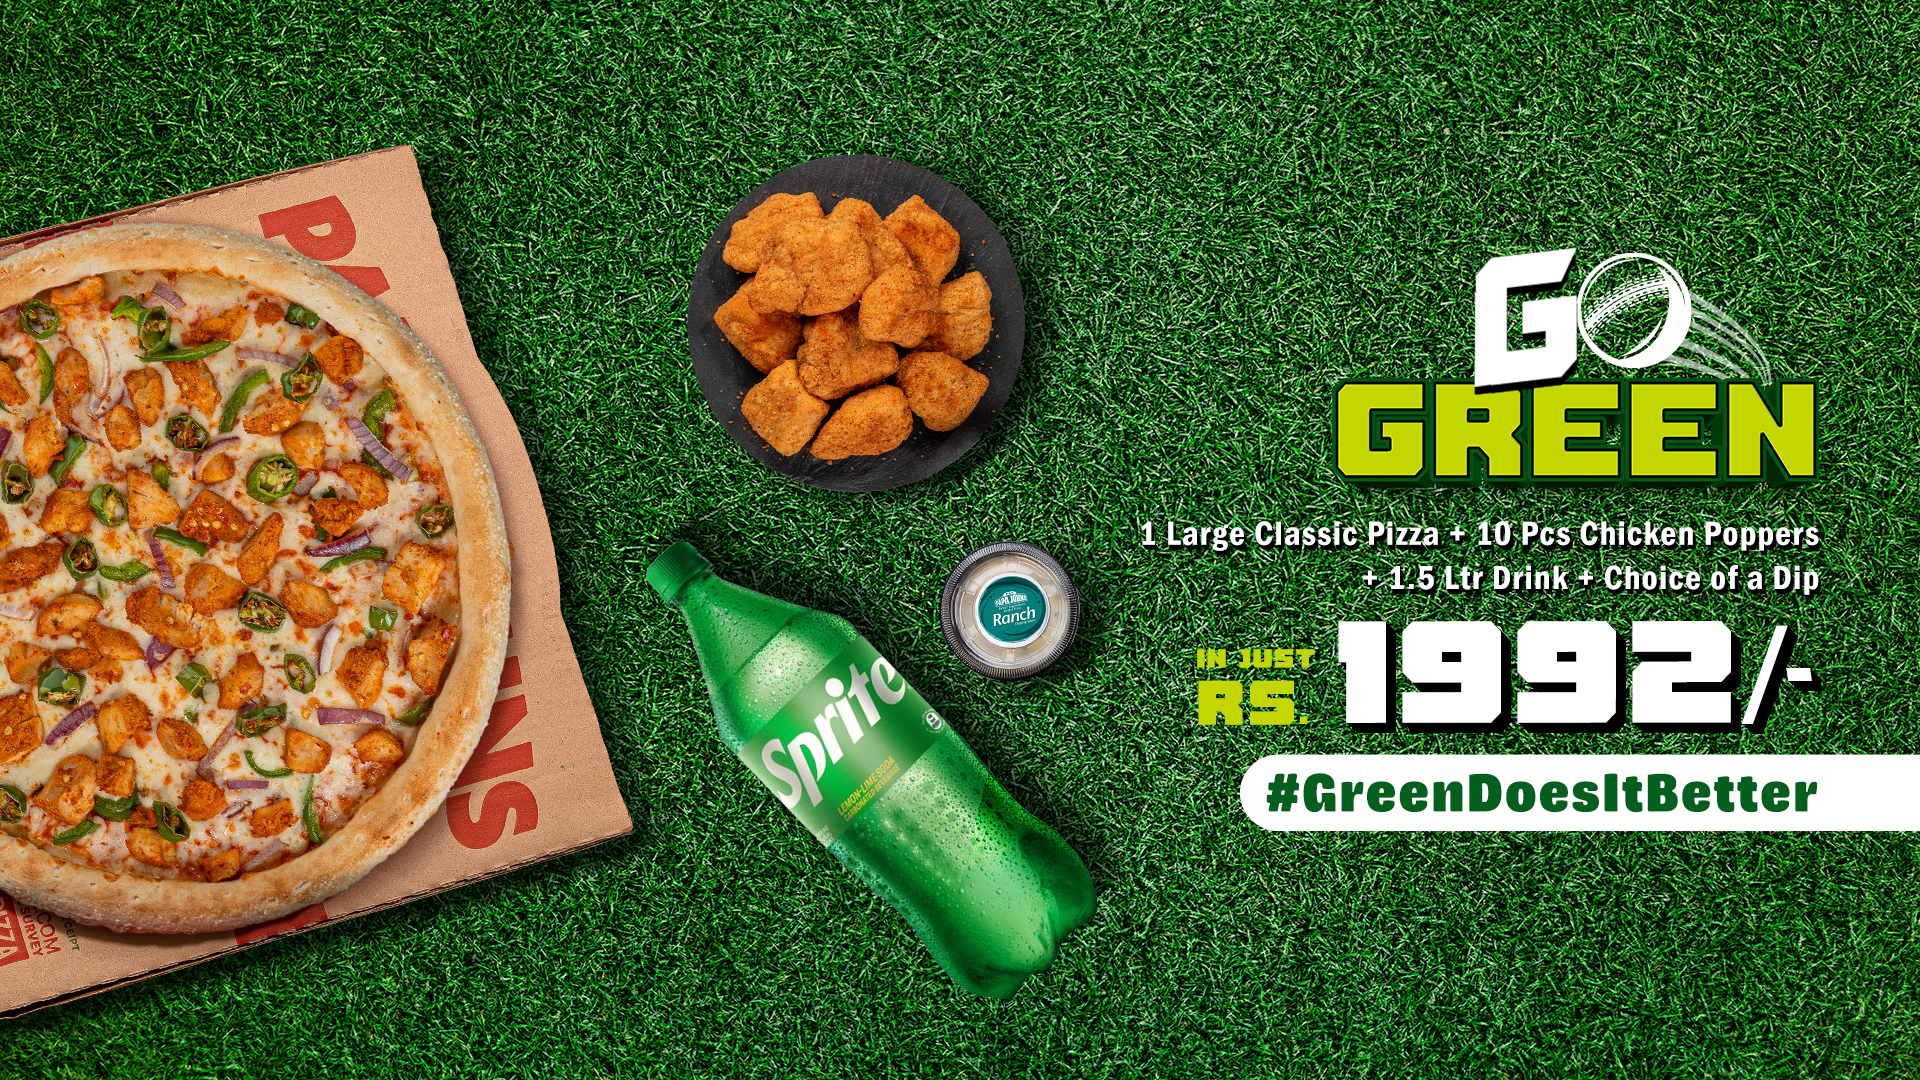 Papa John's Pizza - Go Green Deals